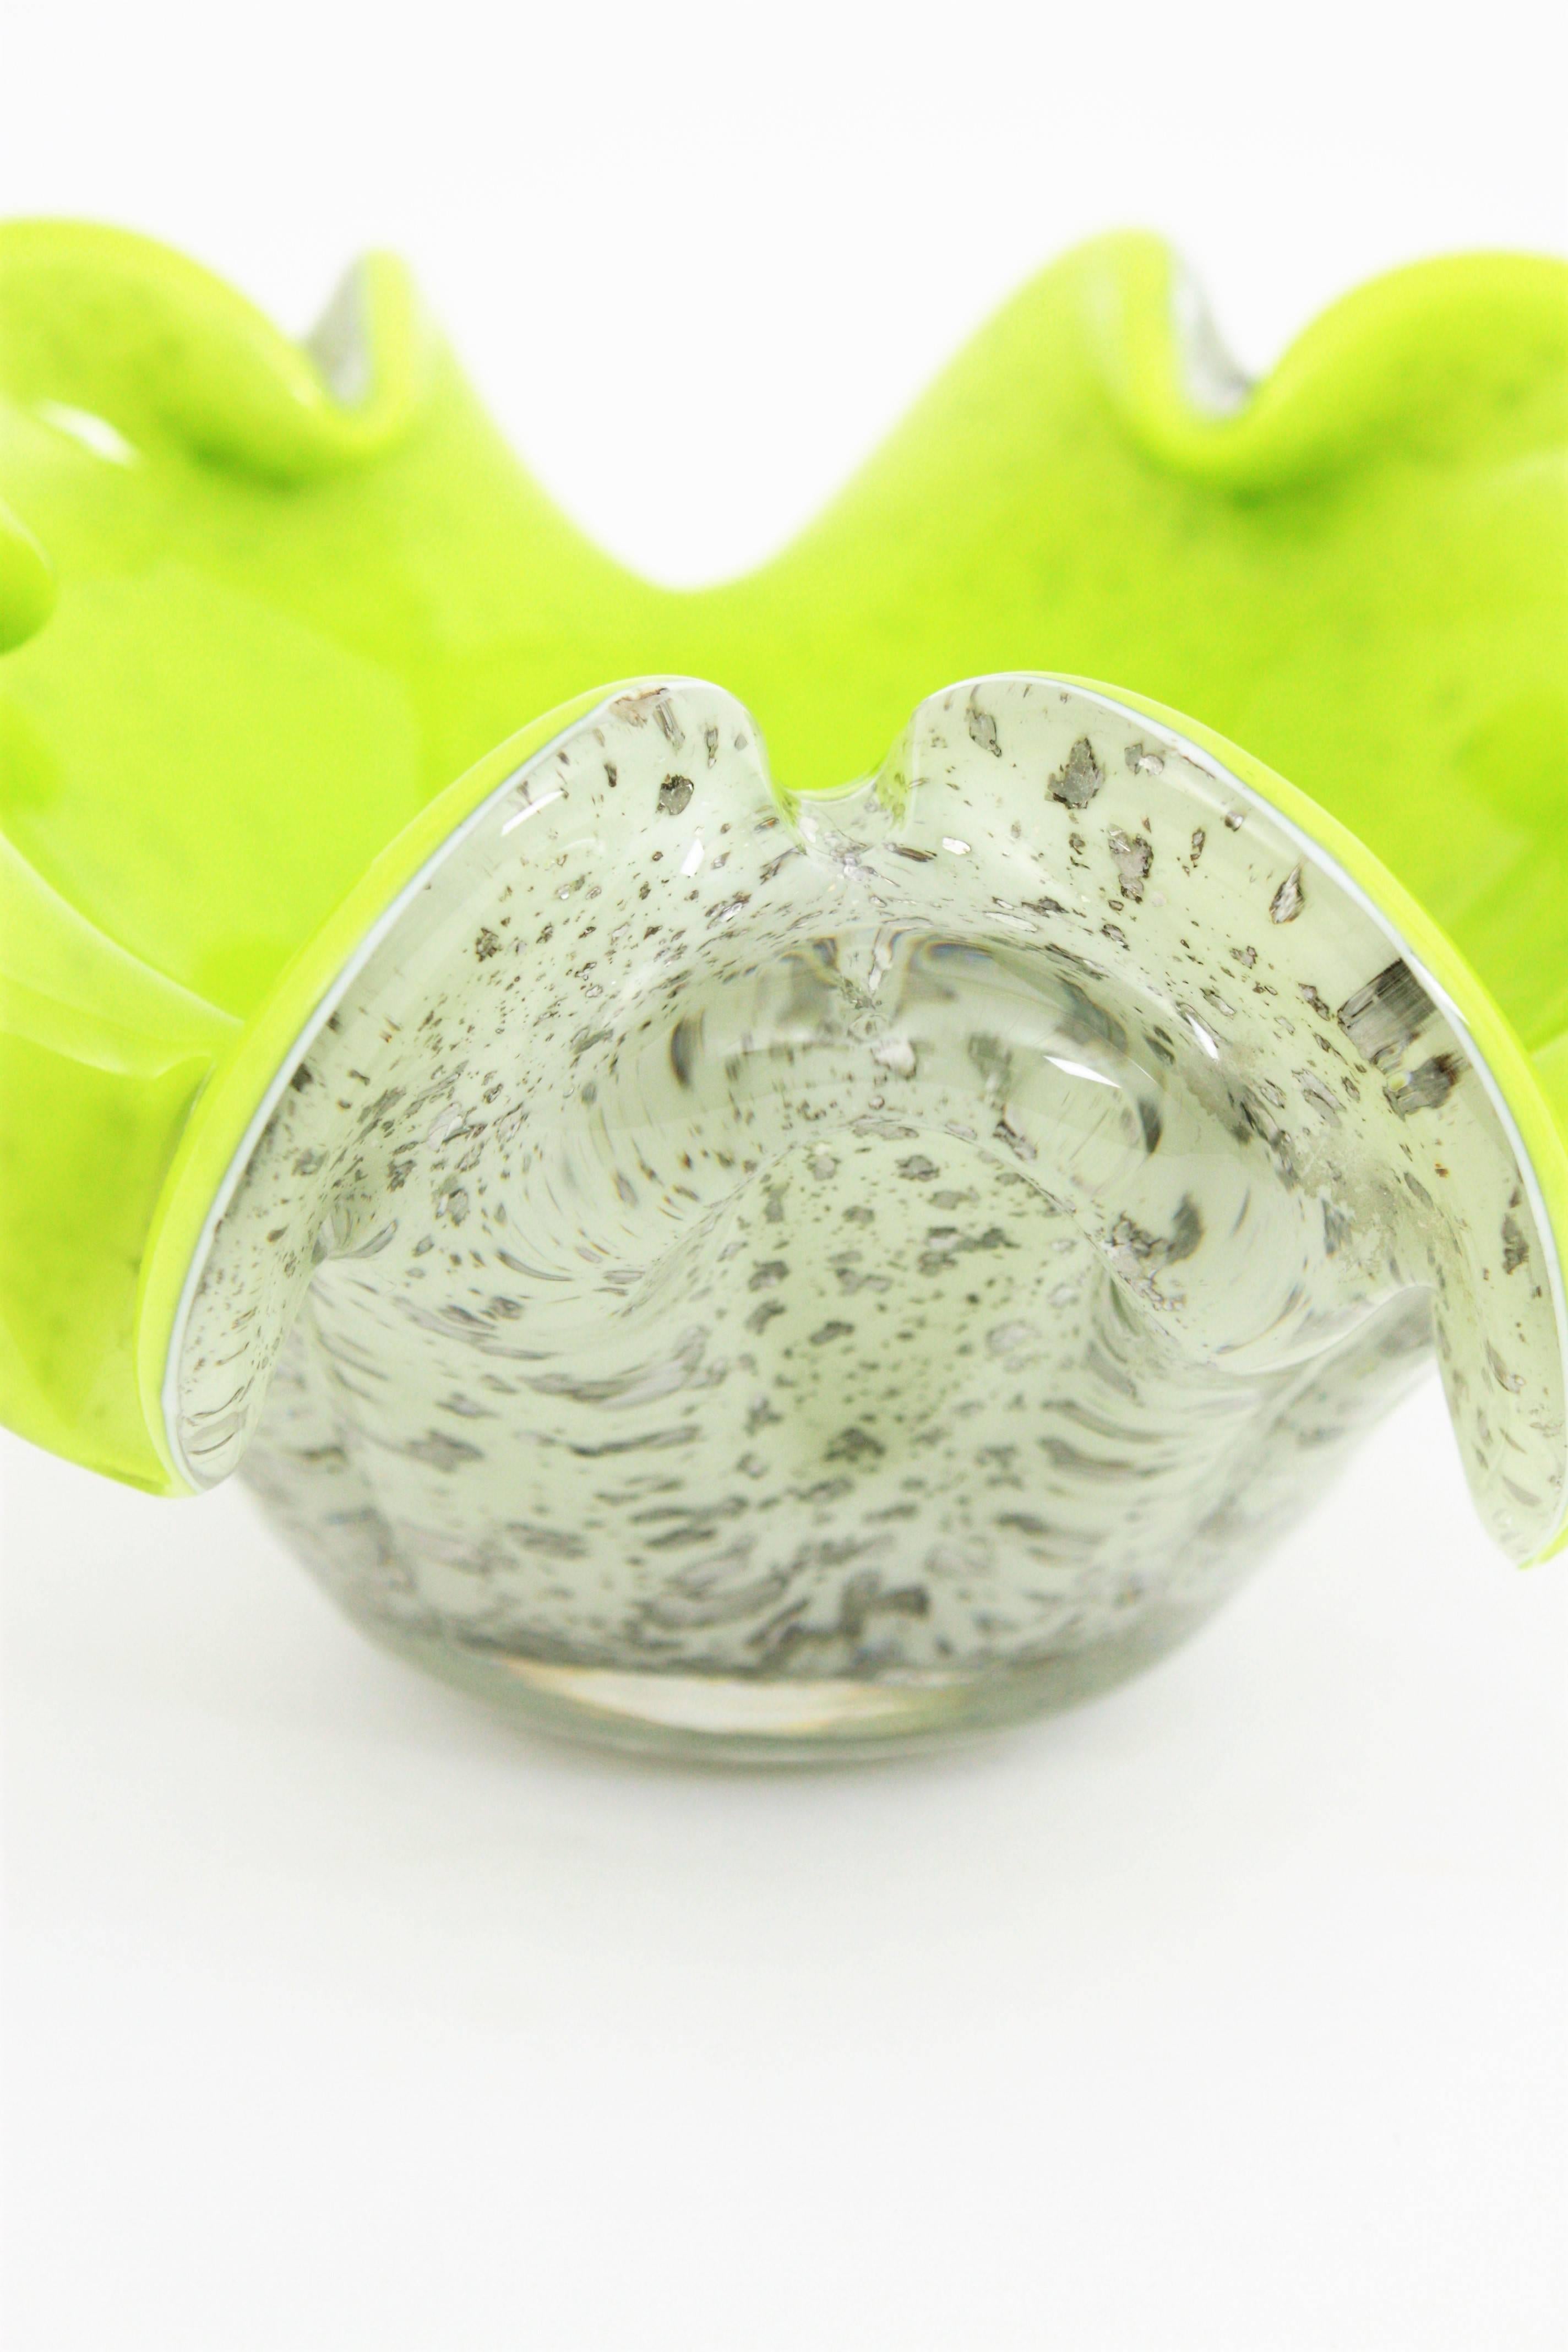 Fratelli Toso Murano Green White Silver Flecks Italian Art Glass Bowl (20. Jahrhundert)